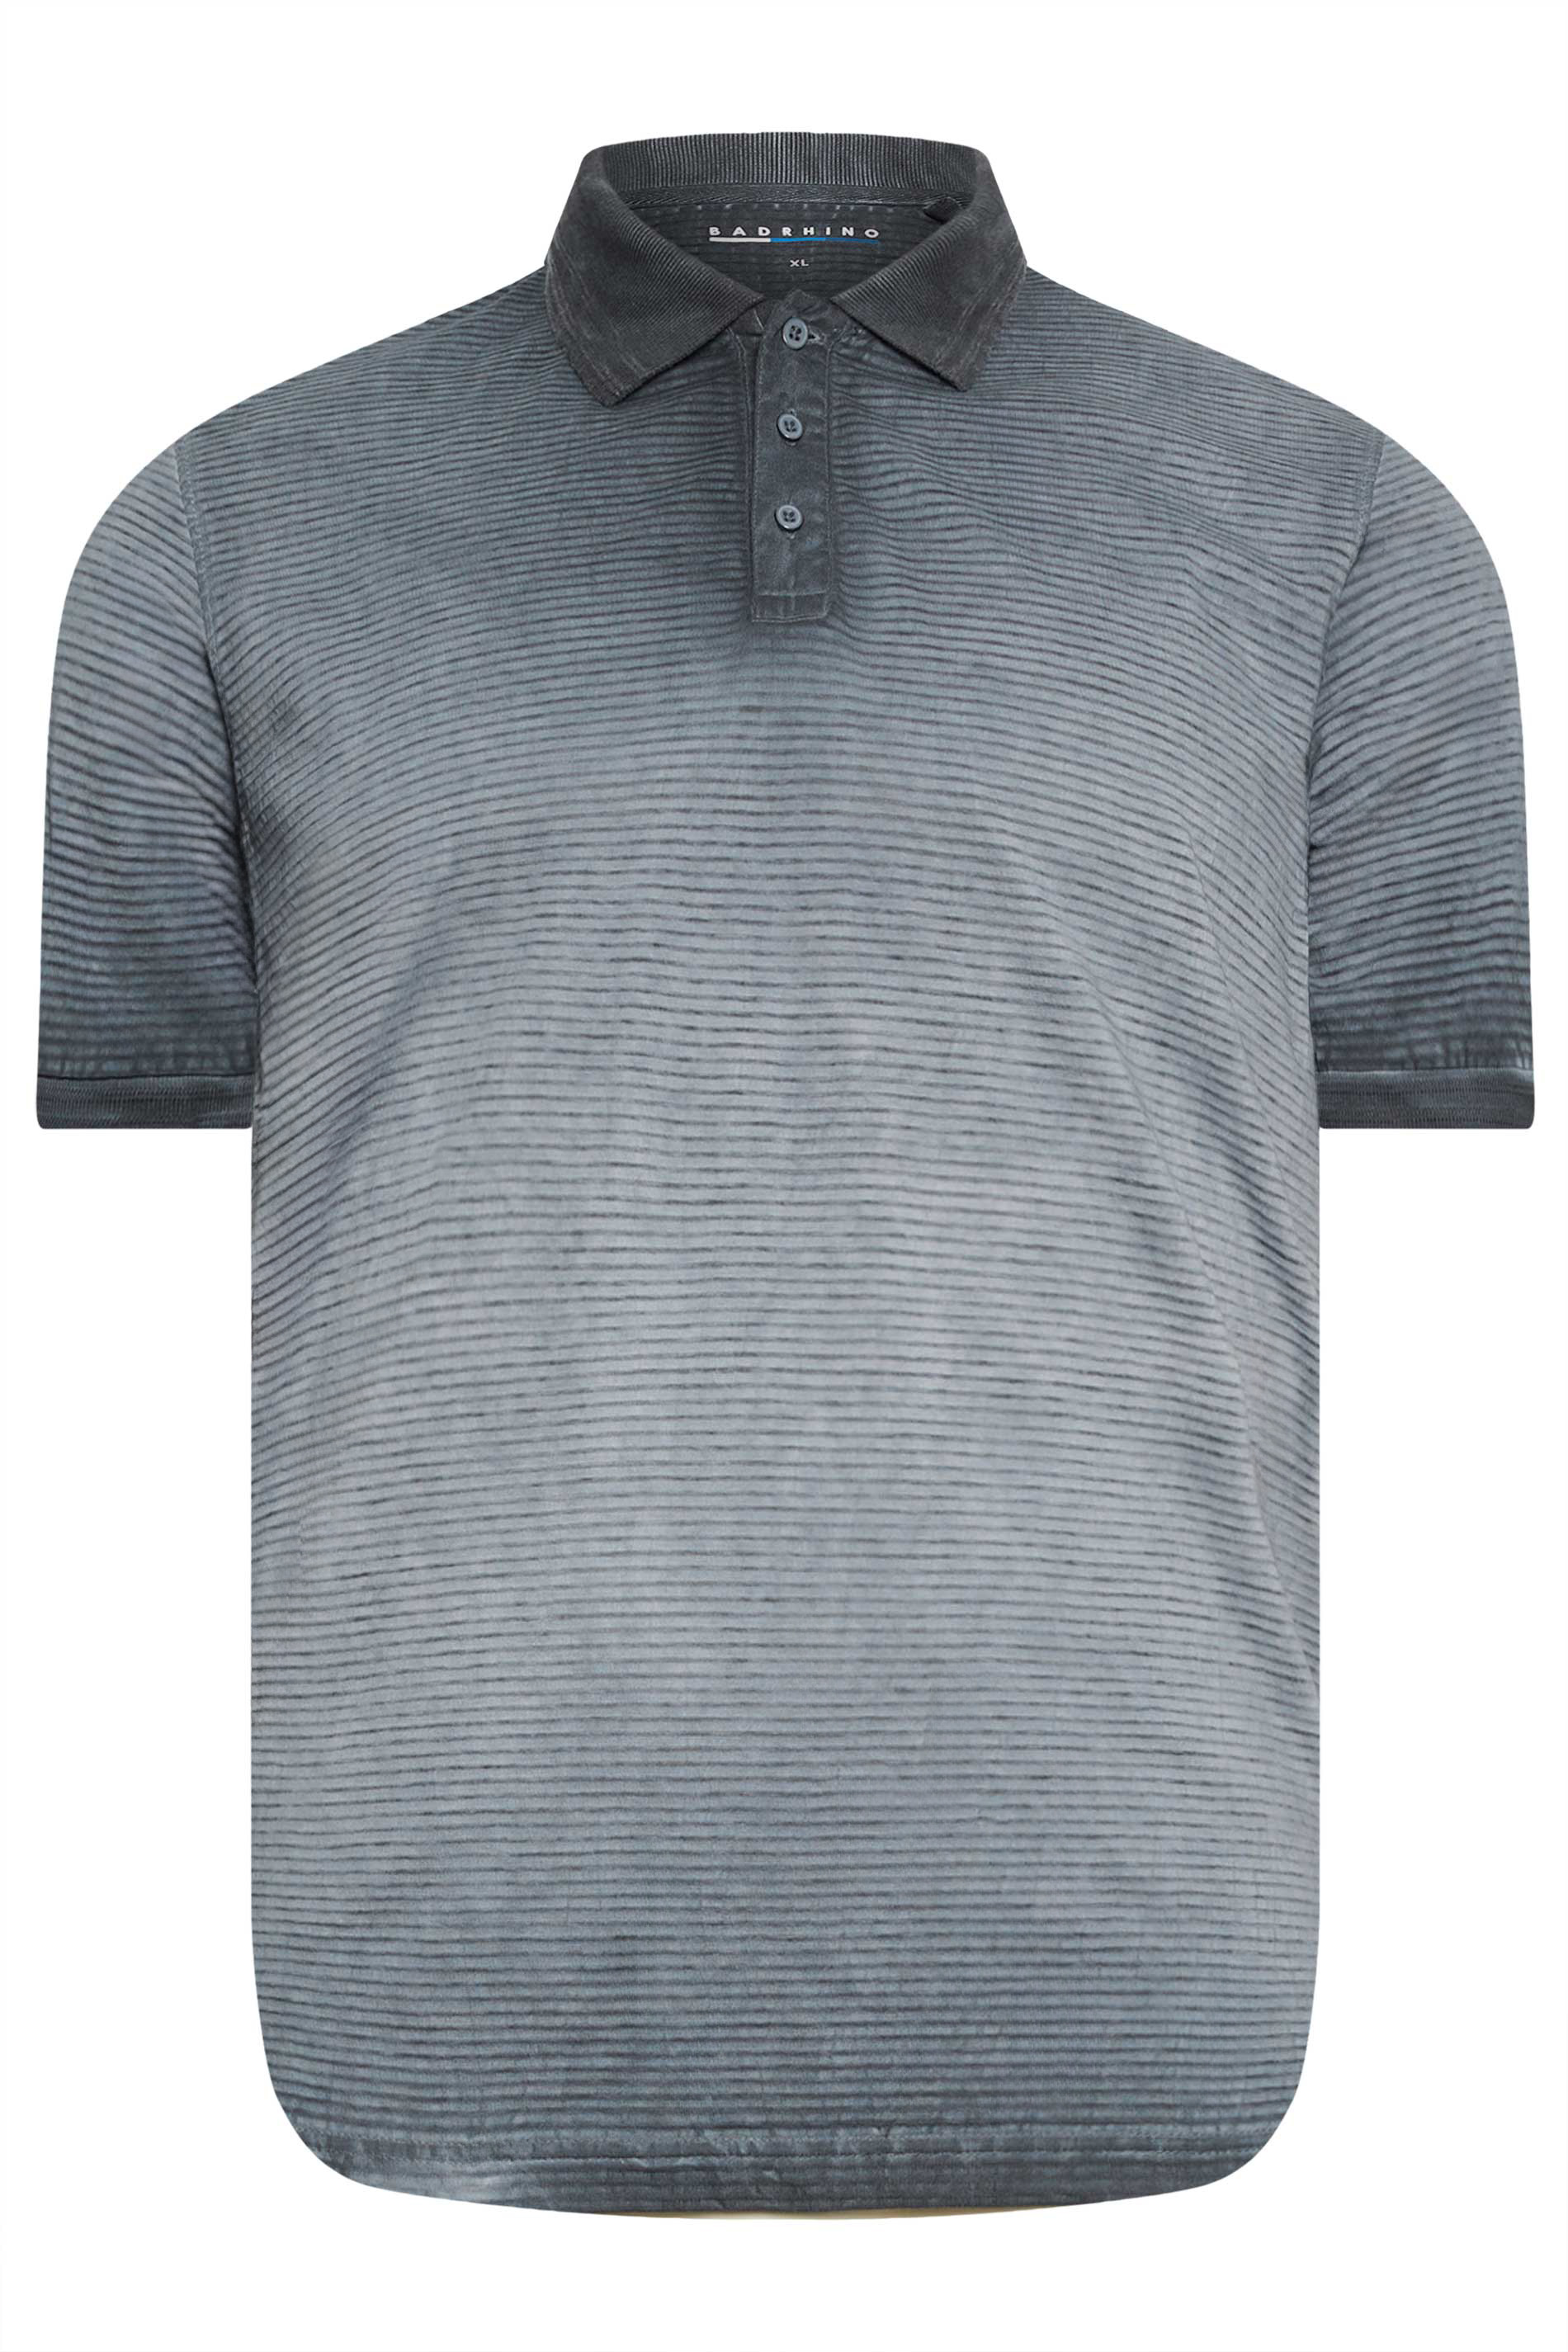 BadRhino Big & Tall Grey Striped Polo Shirt | BadRhino 3